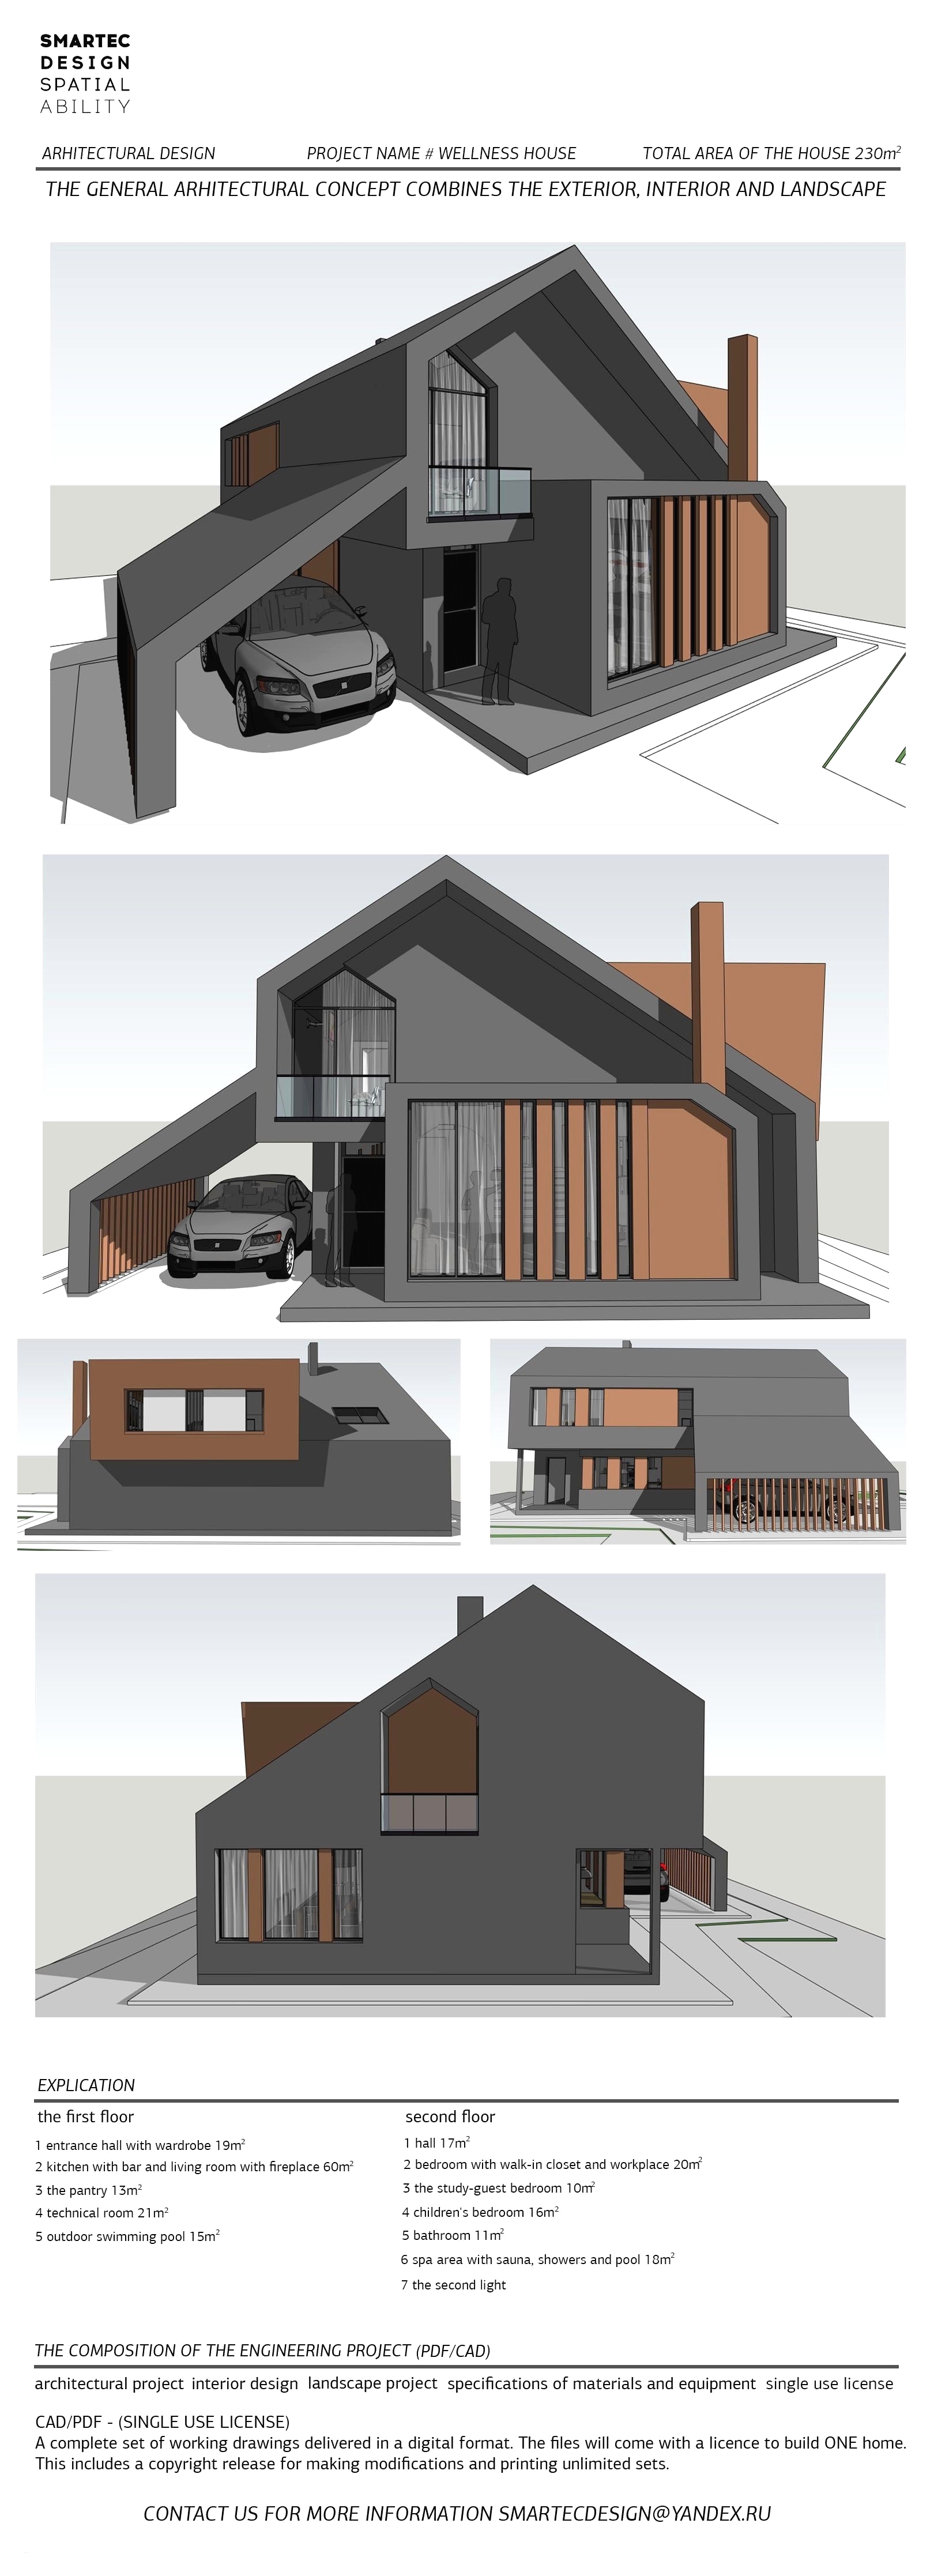 korel home designs new 44 korel home designs house plan ideas pictures